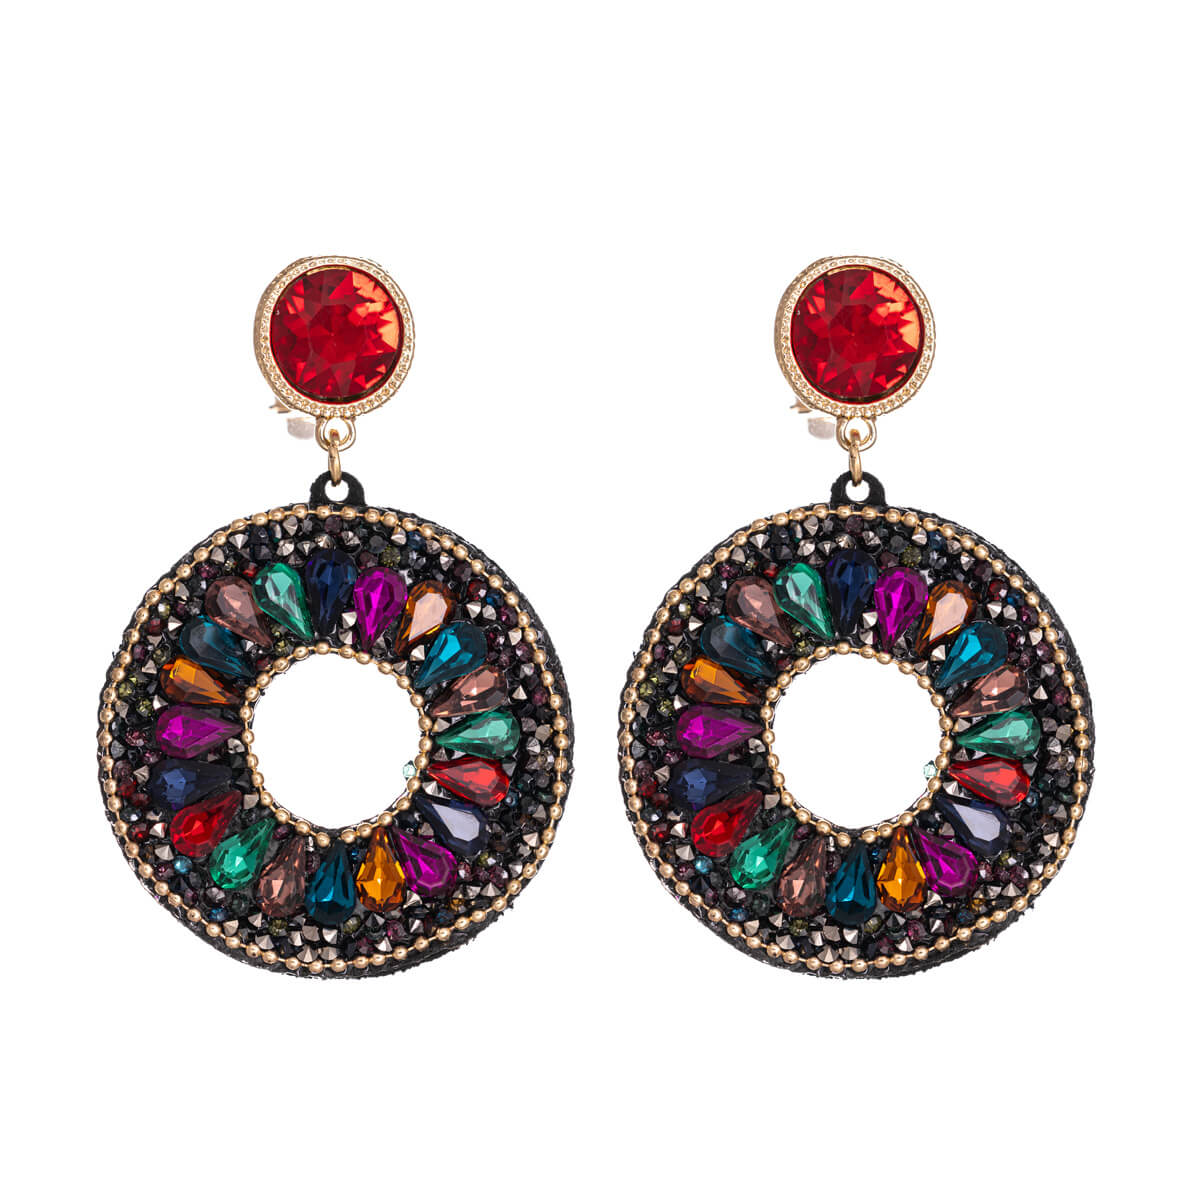 Round colourful festive clip earrings